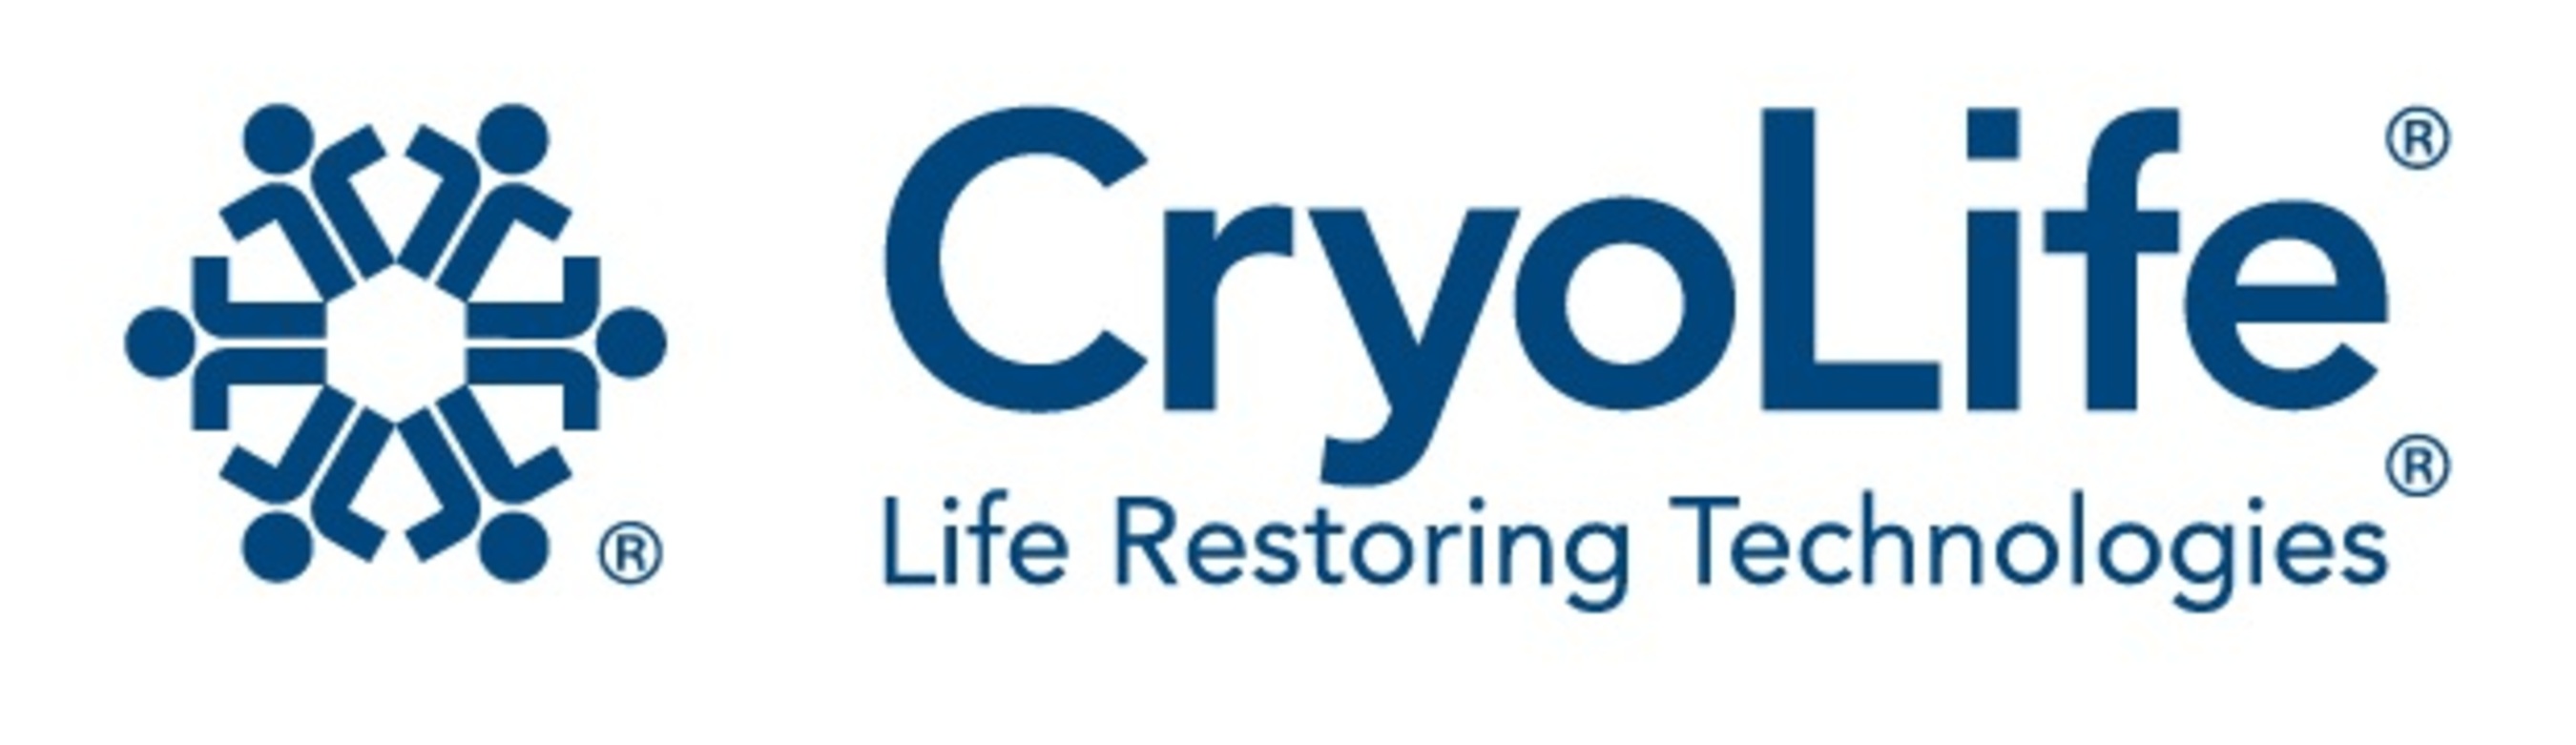 Cryolife logo